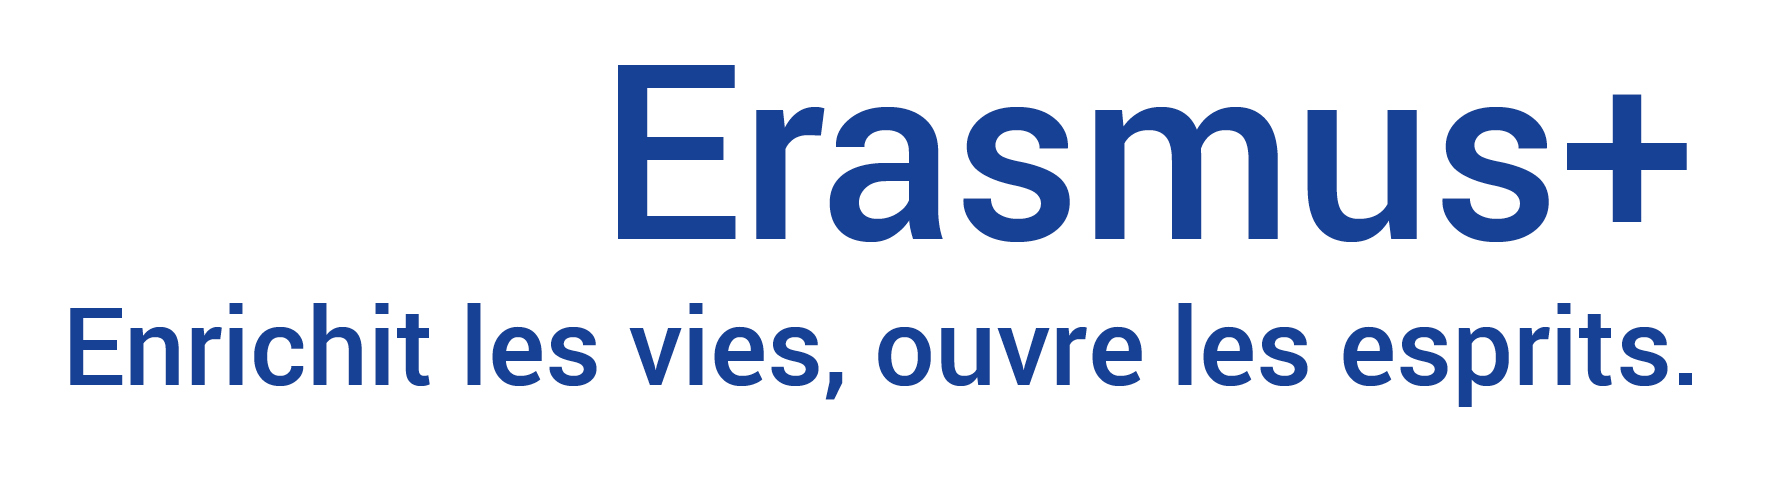 Erasmus_with_baseline-pos-ALL_lang_FR_1.jpg